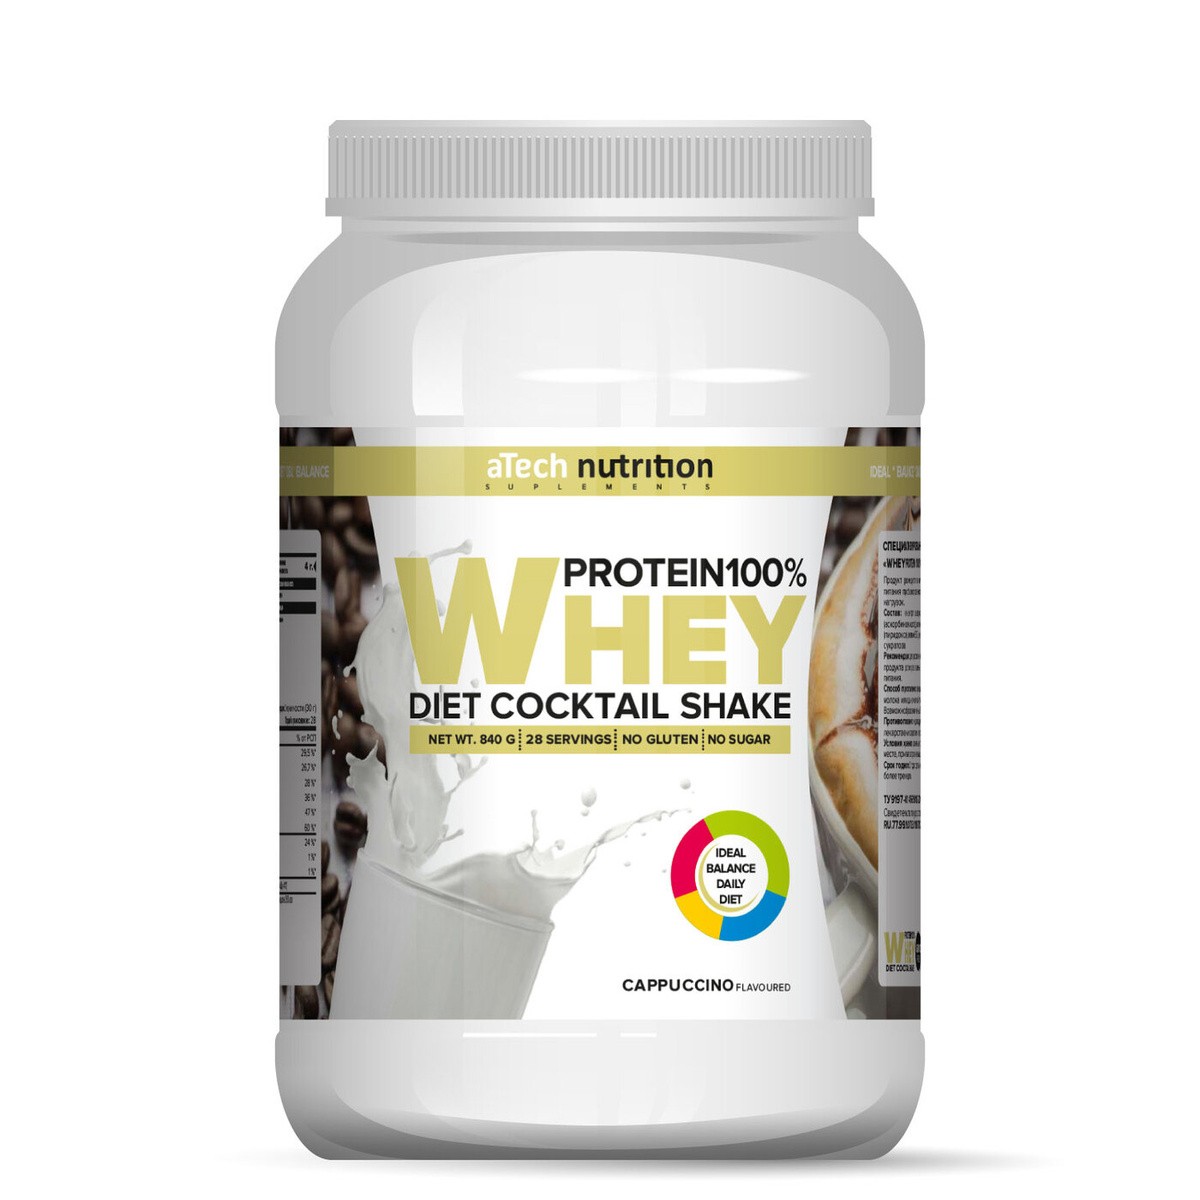 Протеин Whey Protein 100%, aTech Nutrition 840 гр., капучино